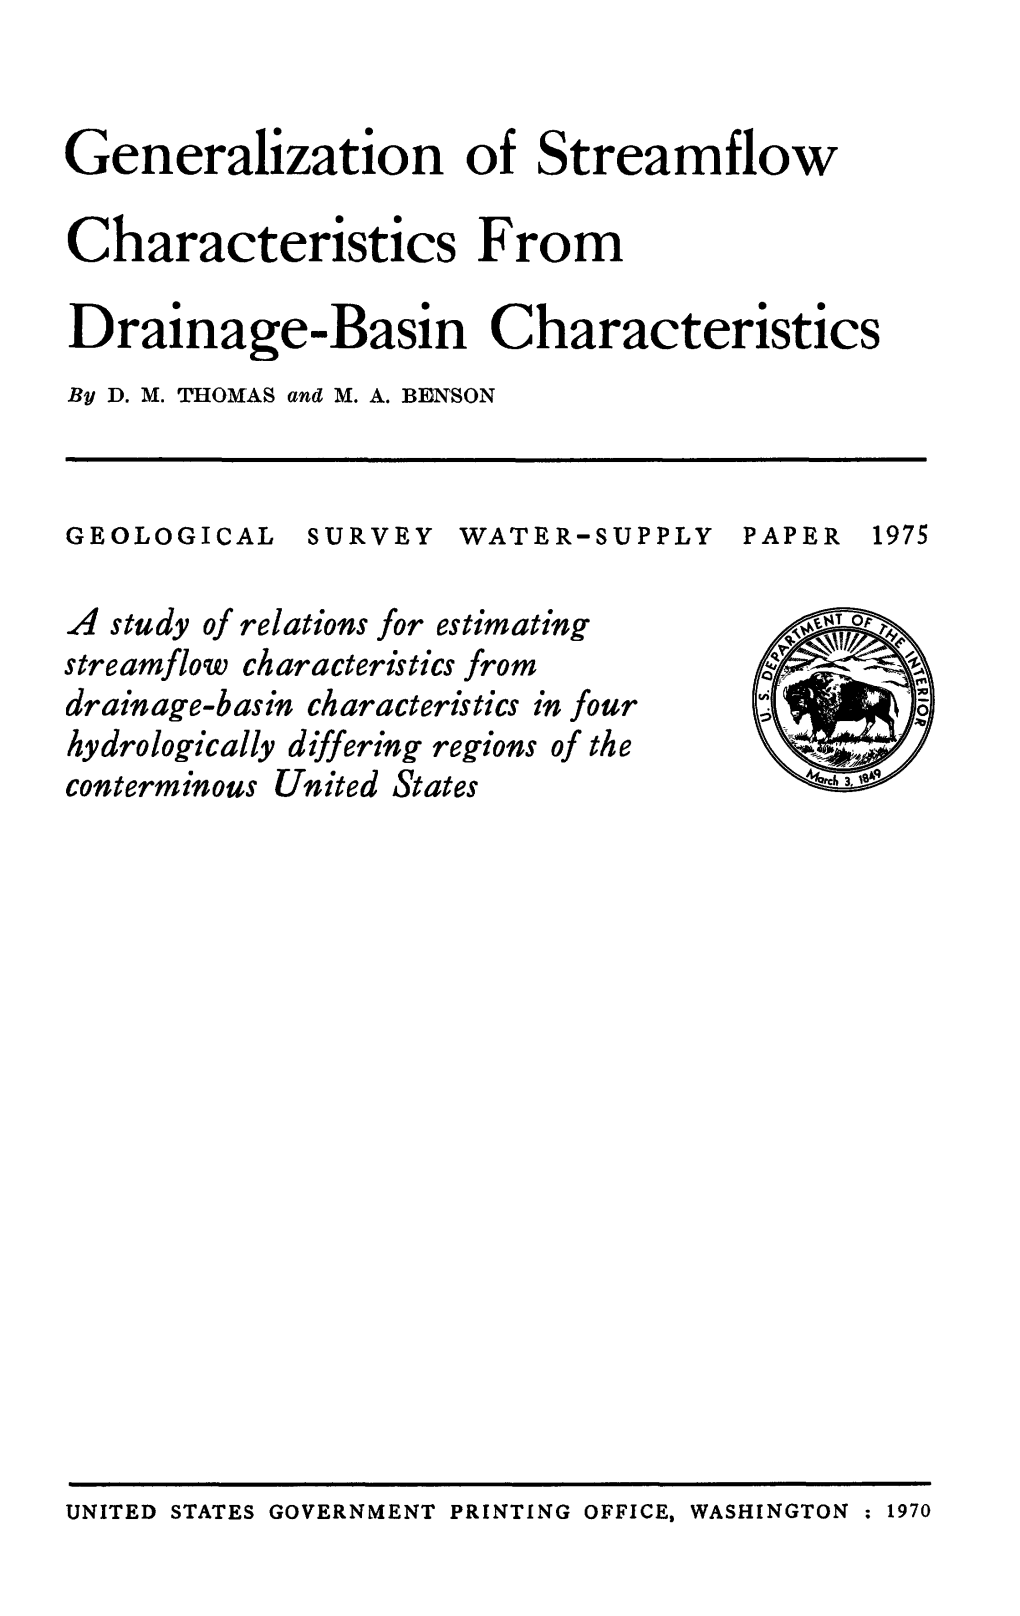 Generalization of Streamflow Characteristics from Drainage-Basin Characteristics by D